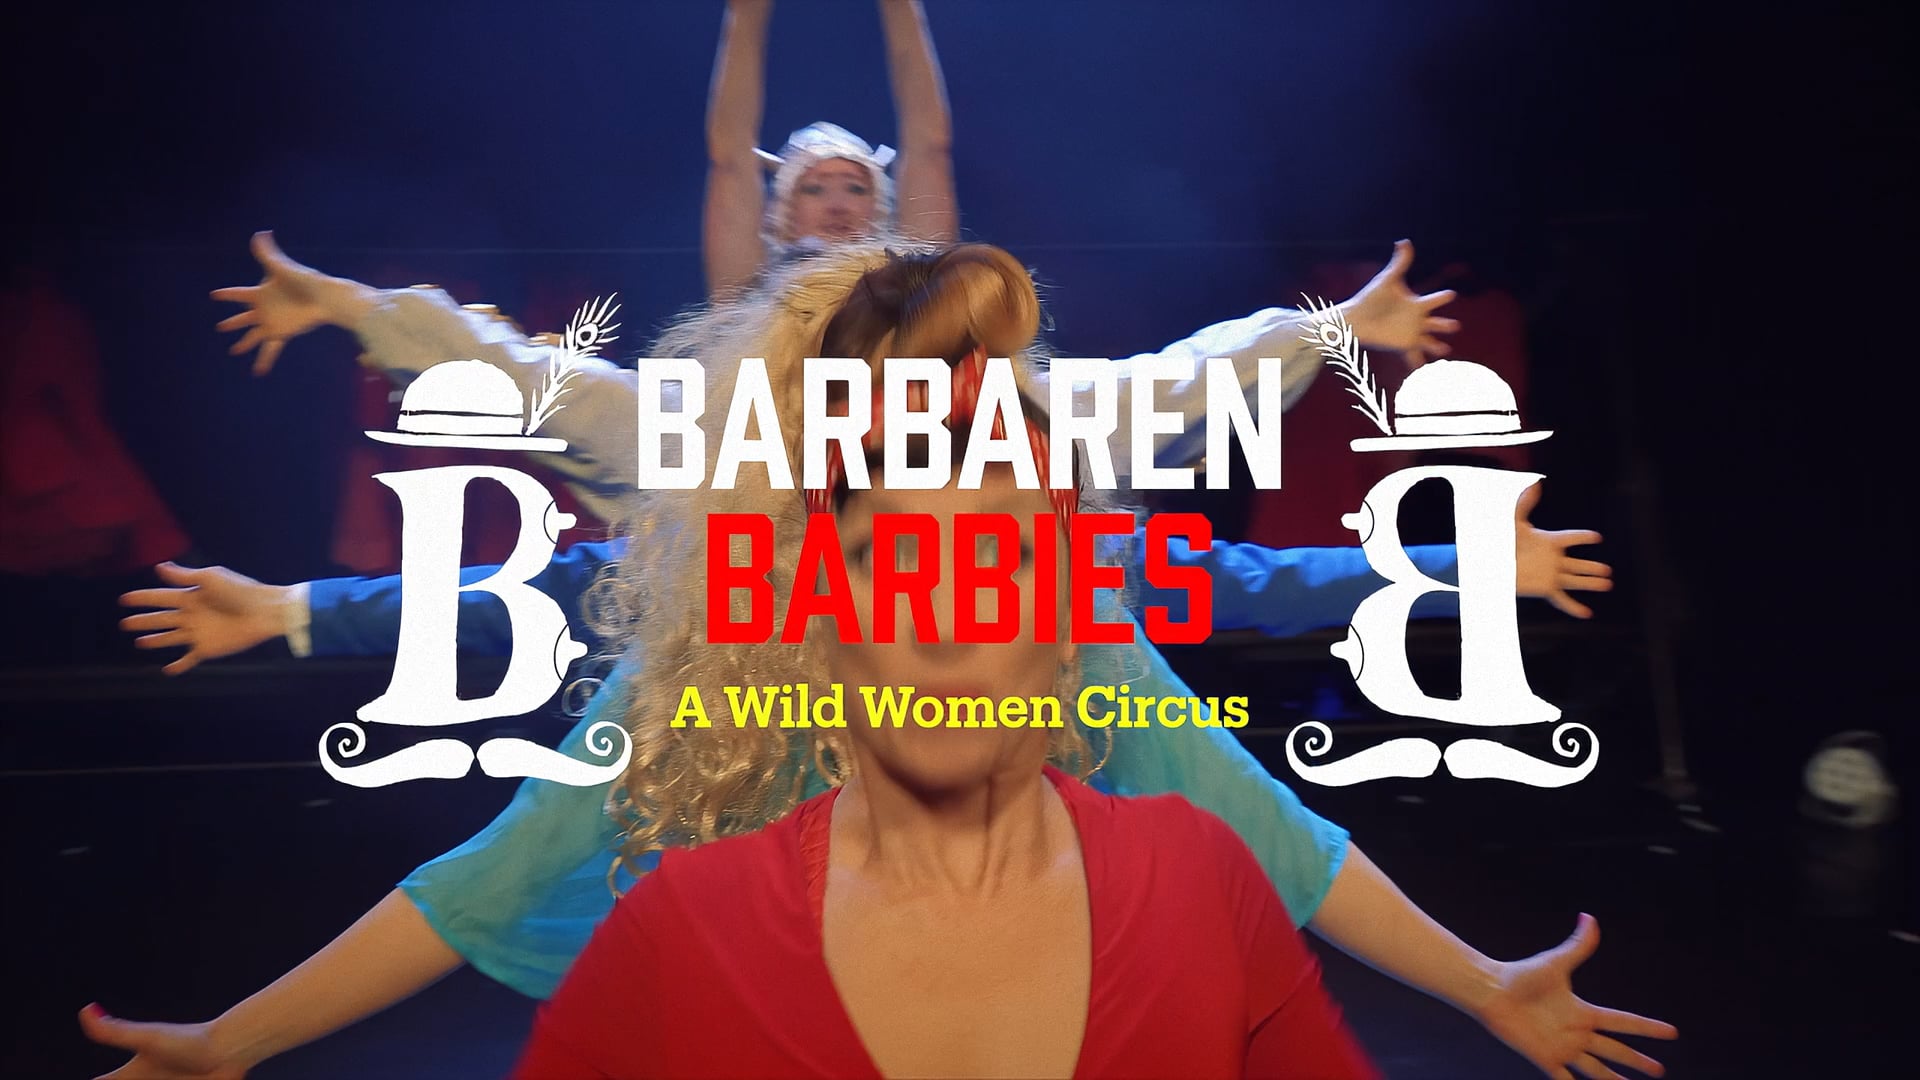 Barbaren Barbies - A Wild Women Circus